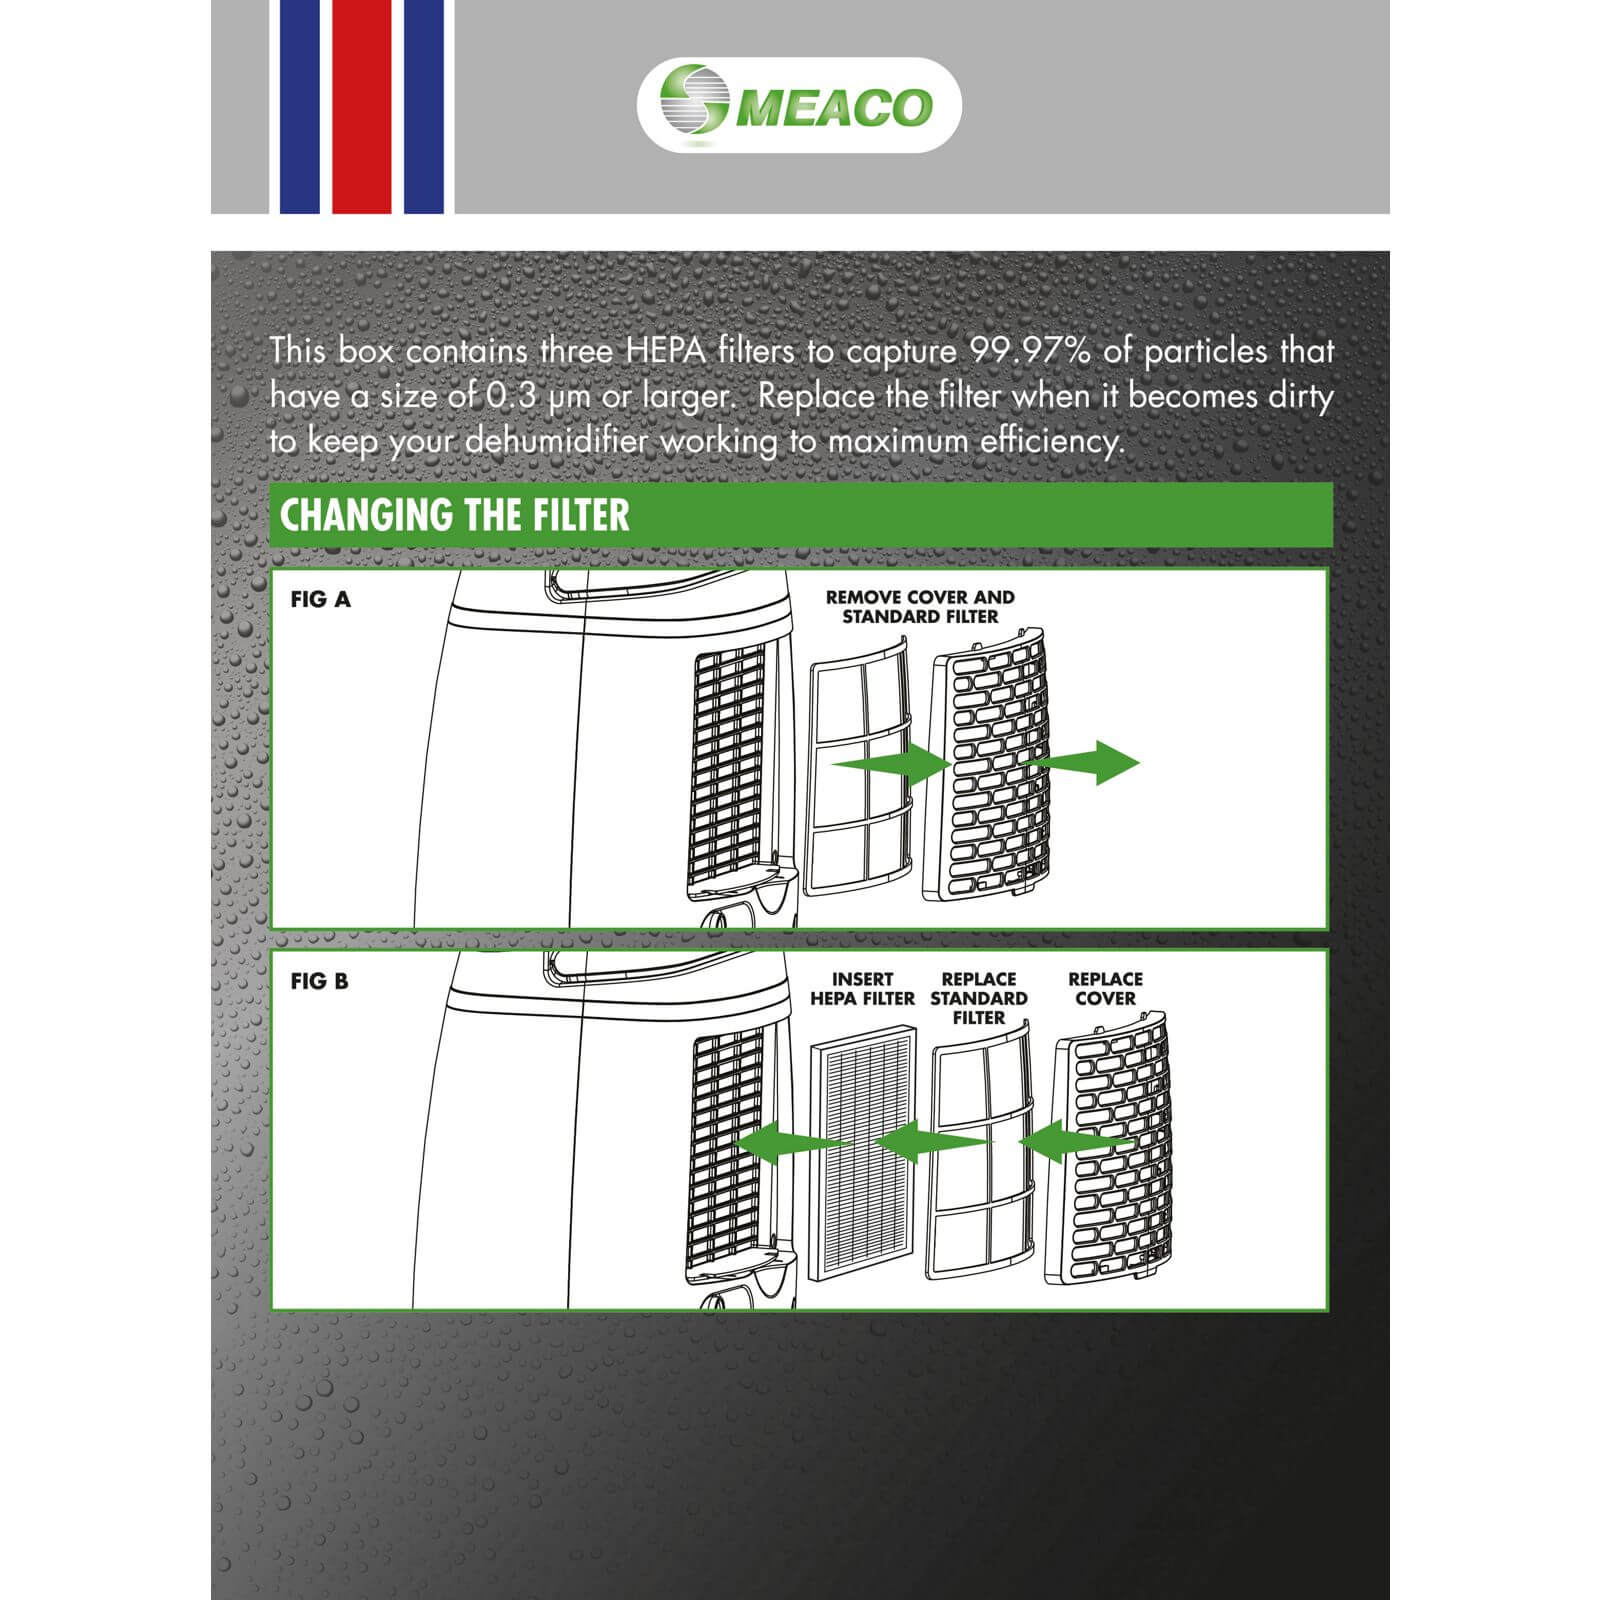 Meaco 20L HEPA Filter - 3 pack